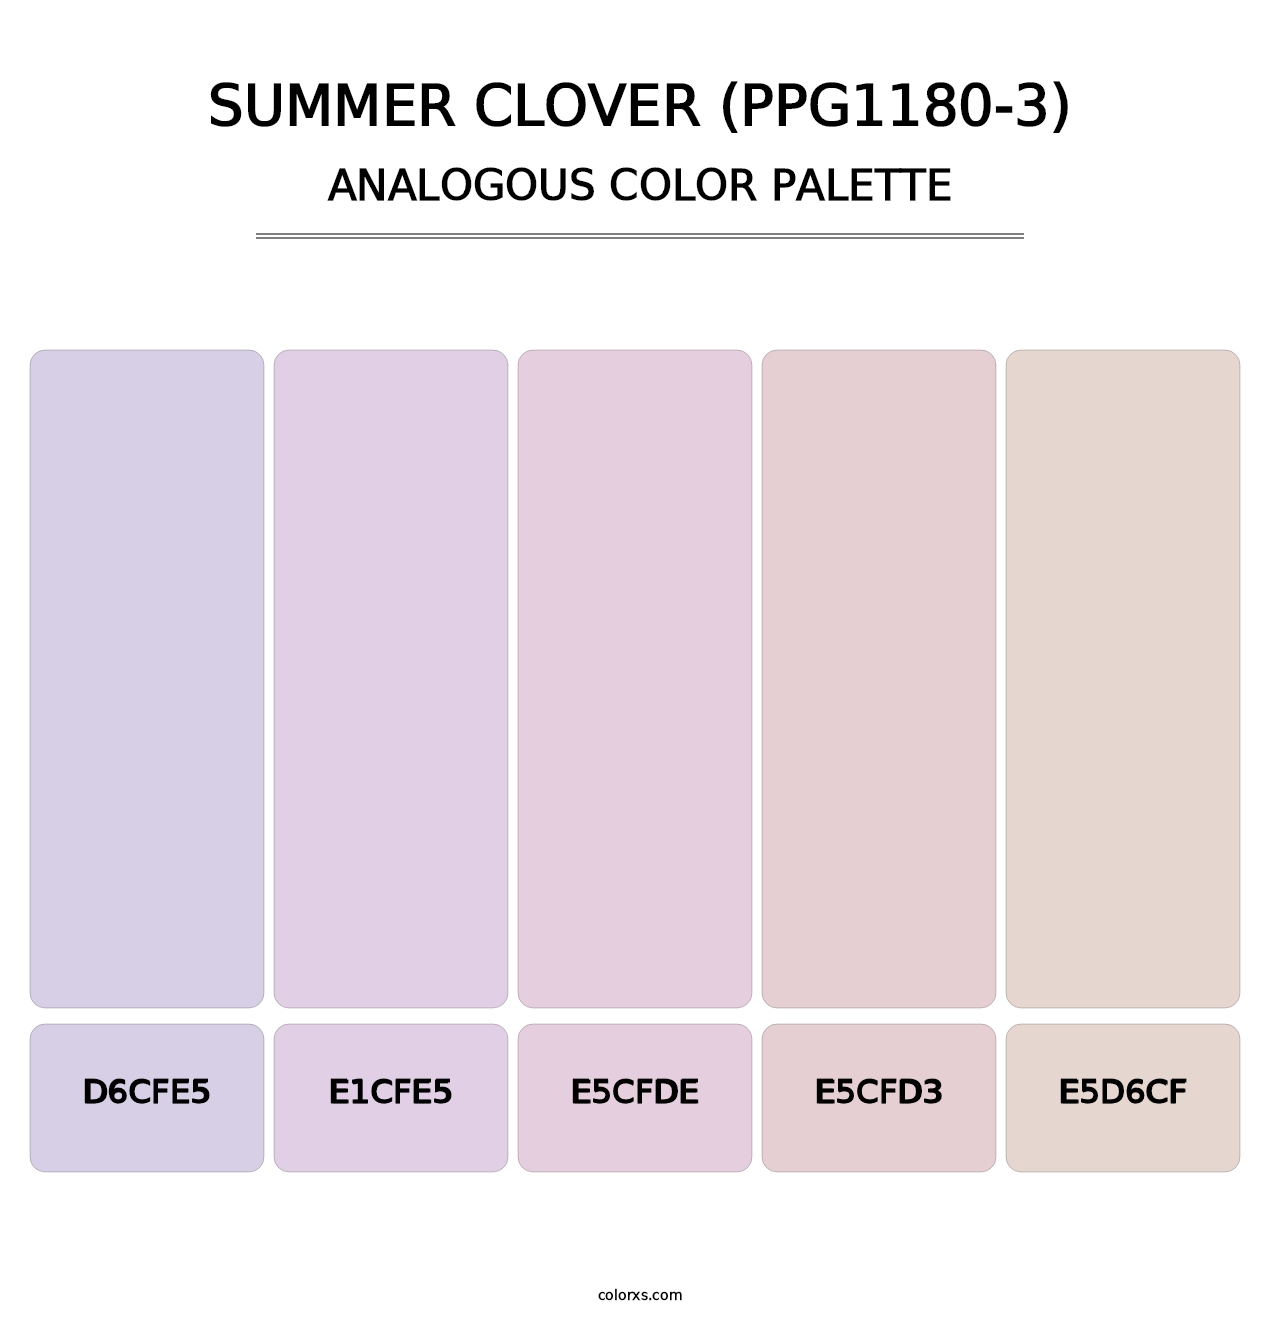 Summer Clover (PPG1180-3) - Analogous Color Palette